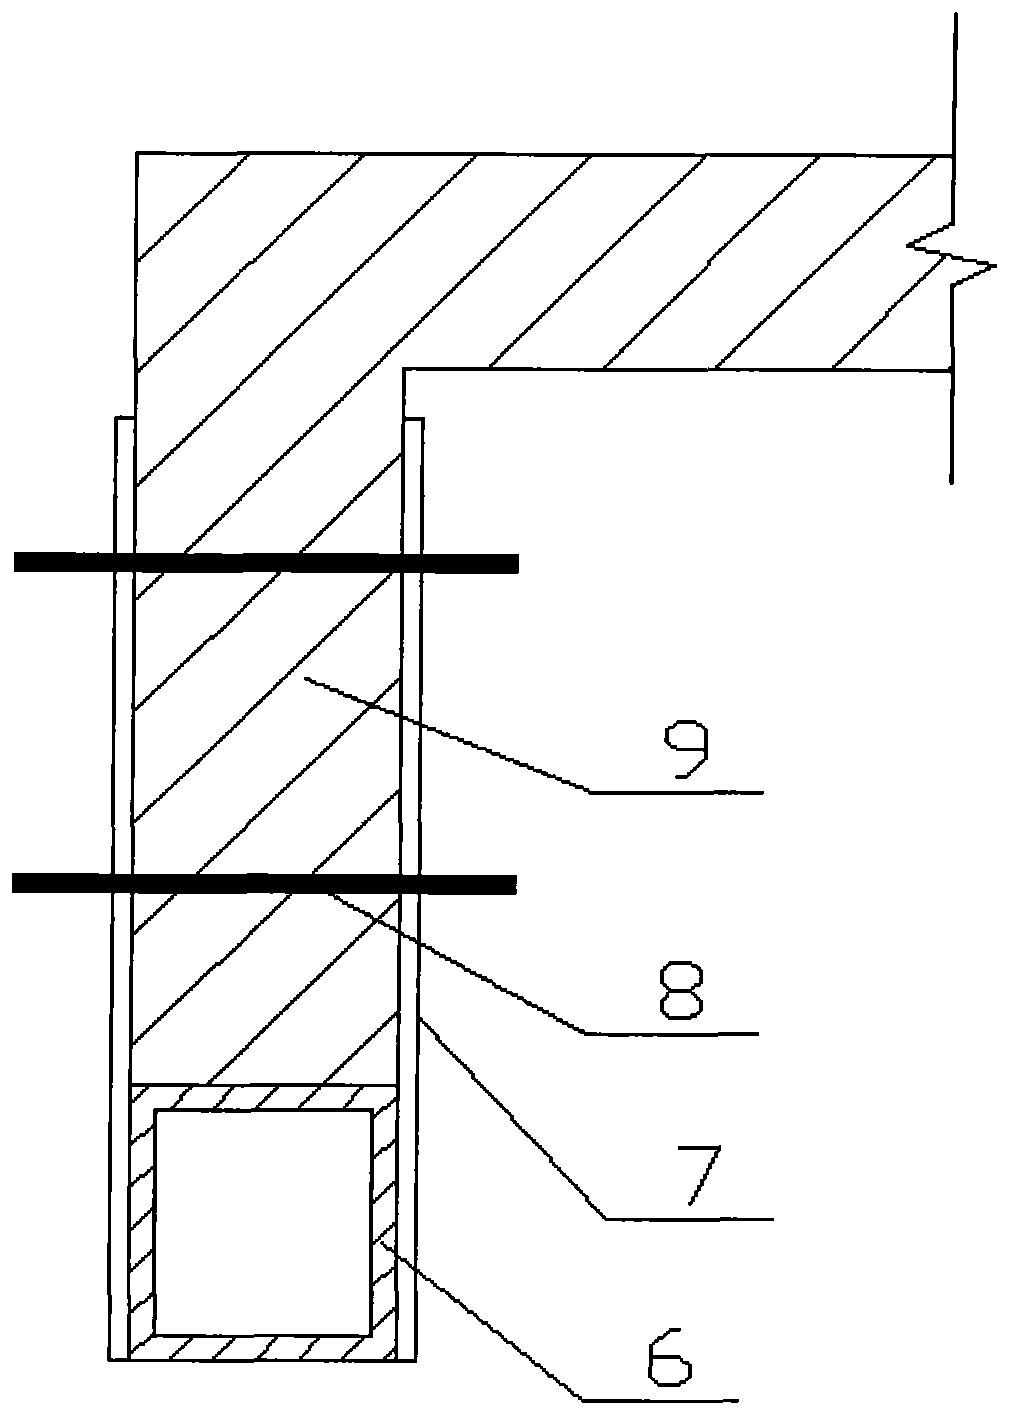 Method for reinforcing building structure